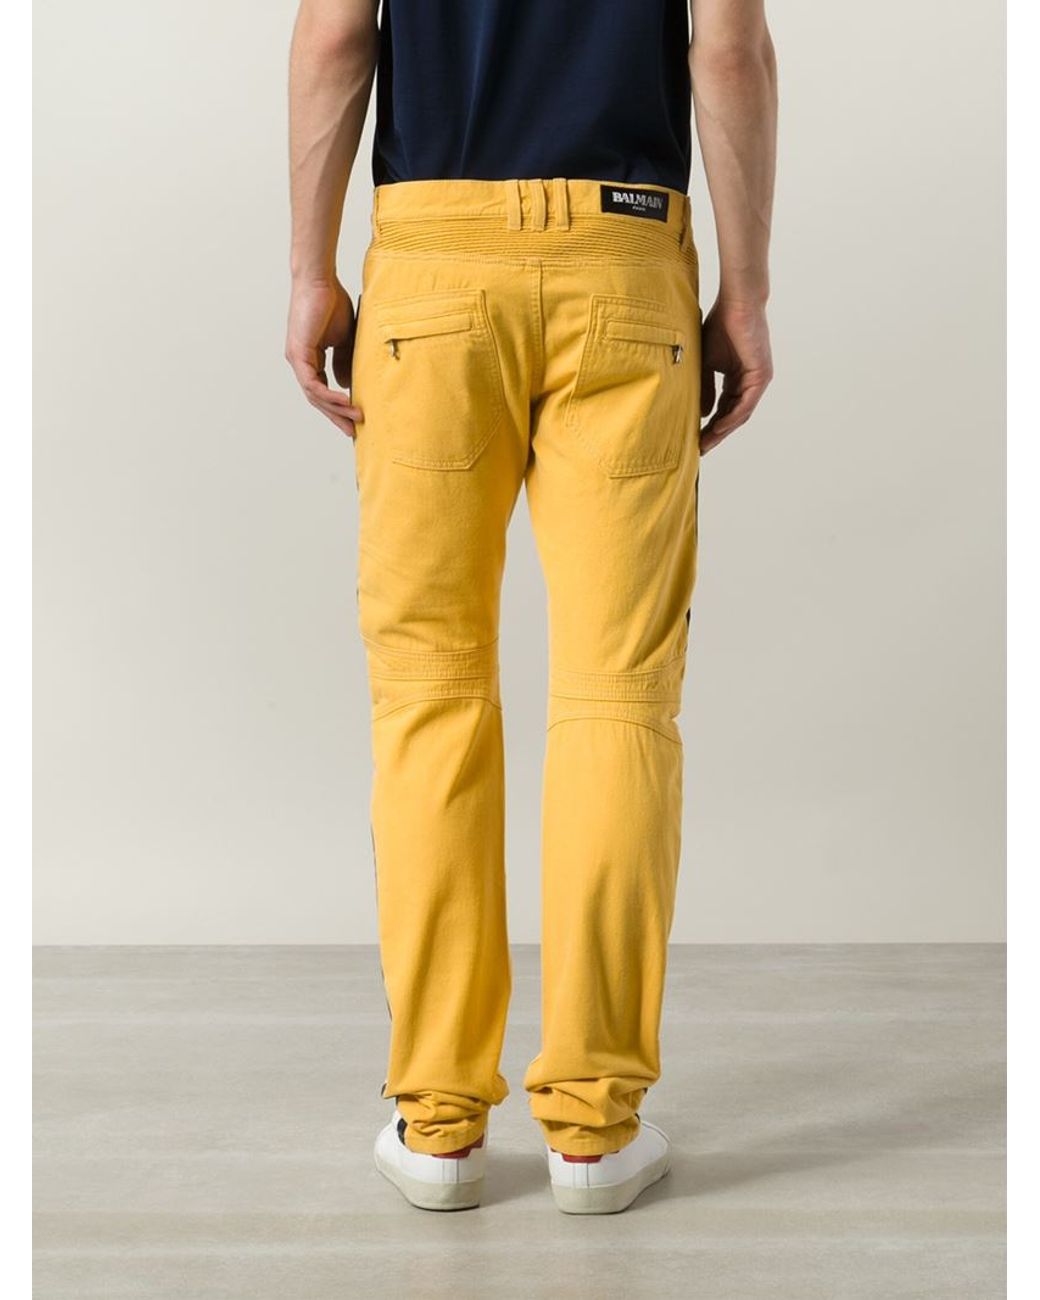 Balmain Pokemon Monogram Denim Pants in Yellow for Men